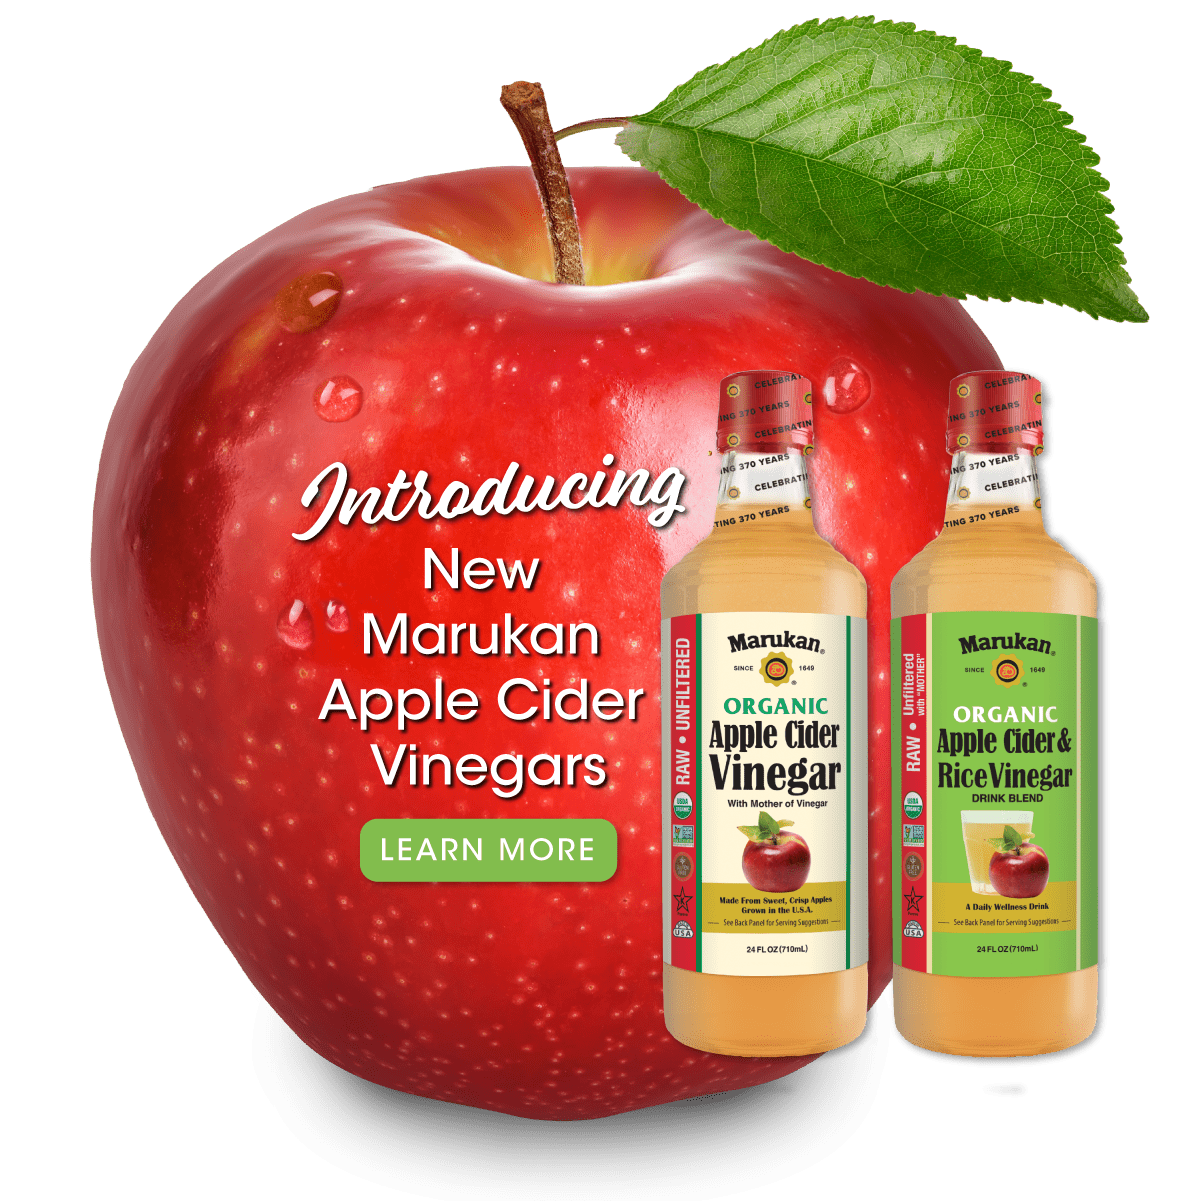 Introducing Apple Cider Vinegar